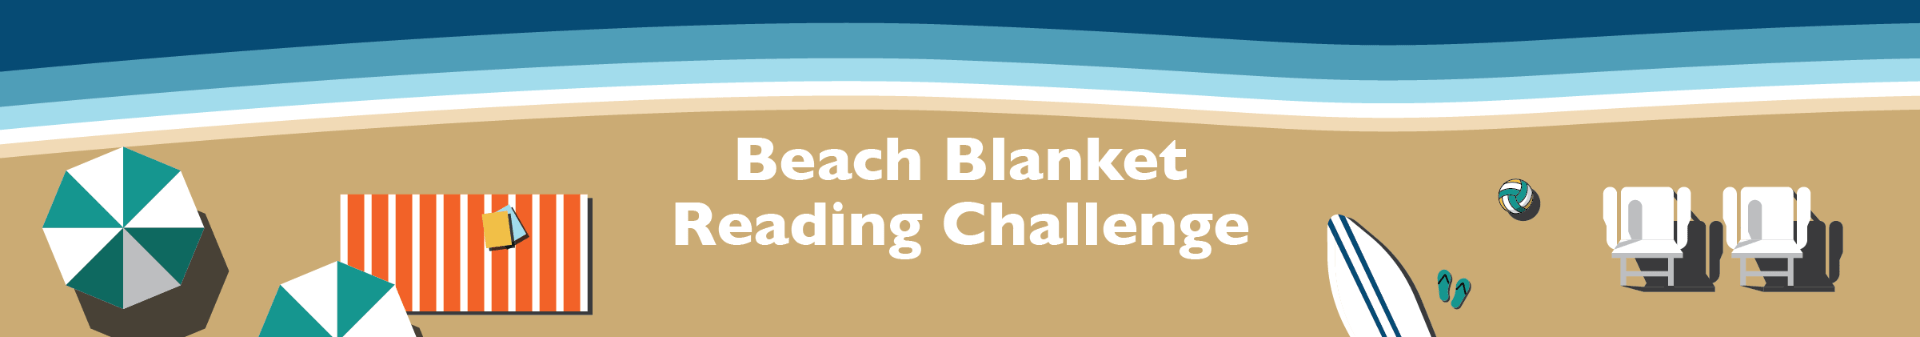 Beach Blanket Reading Challenge